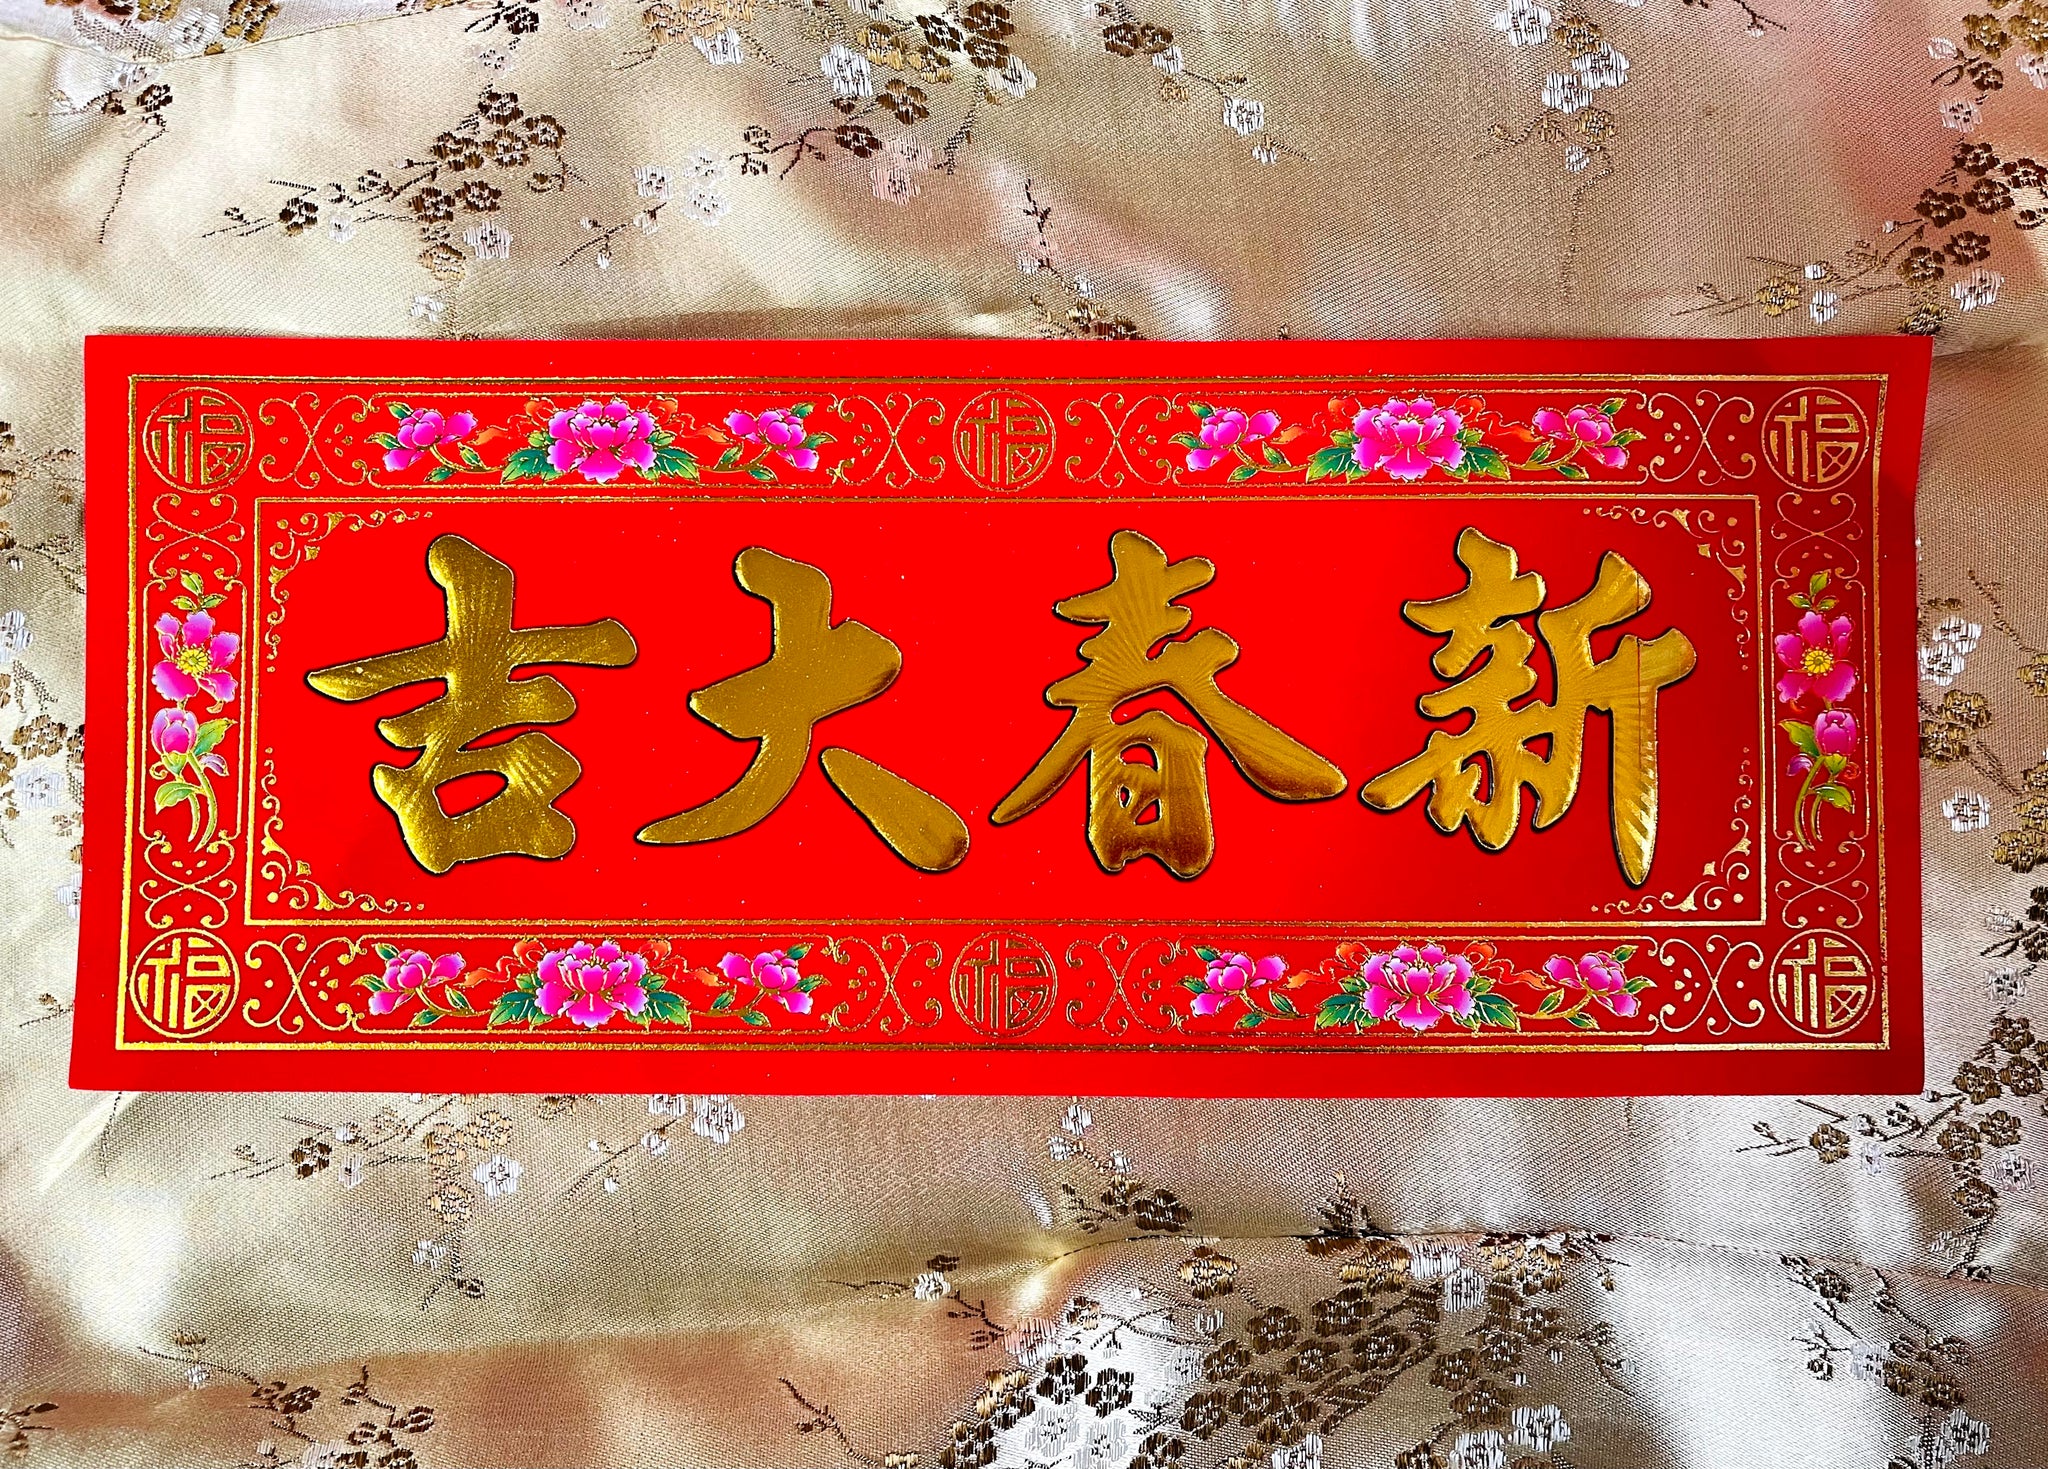 Lunar New Year Velvet Paper Banners